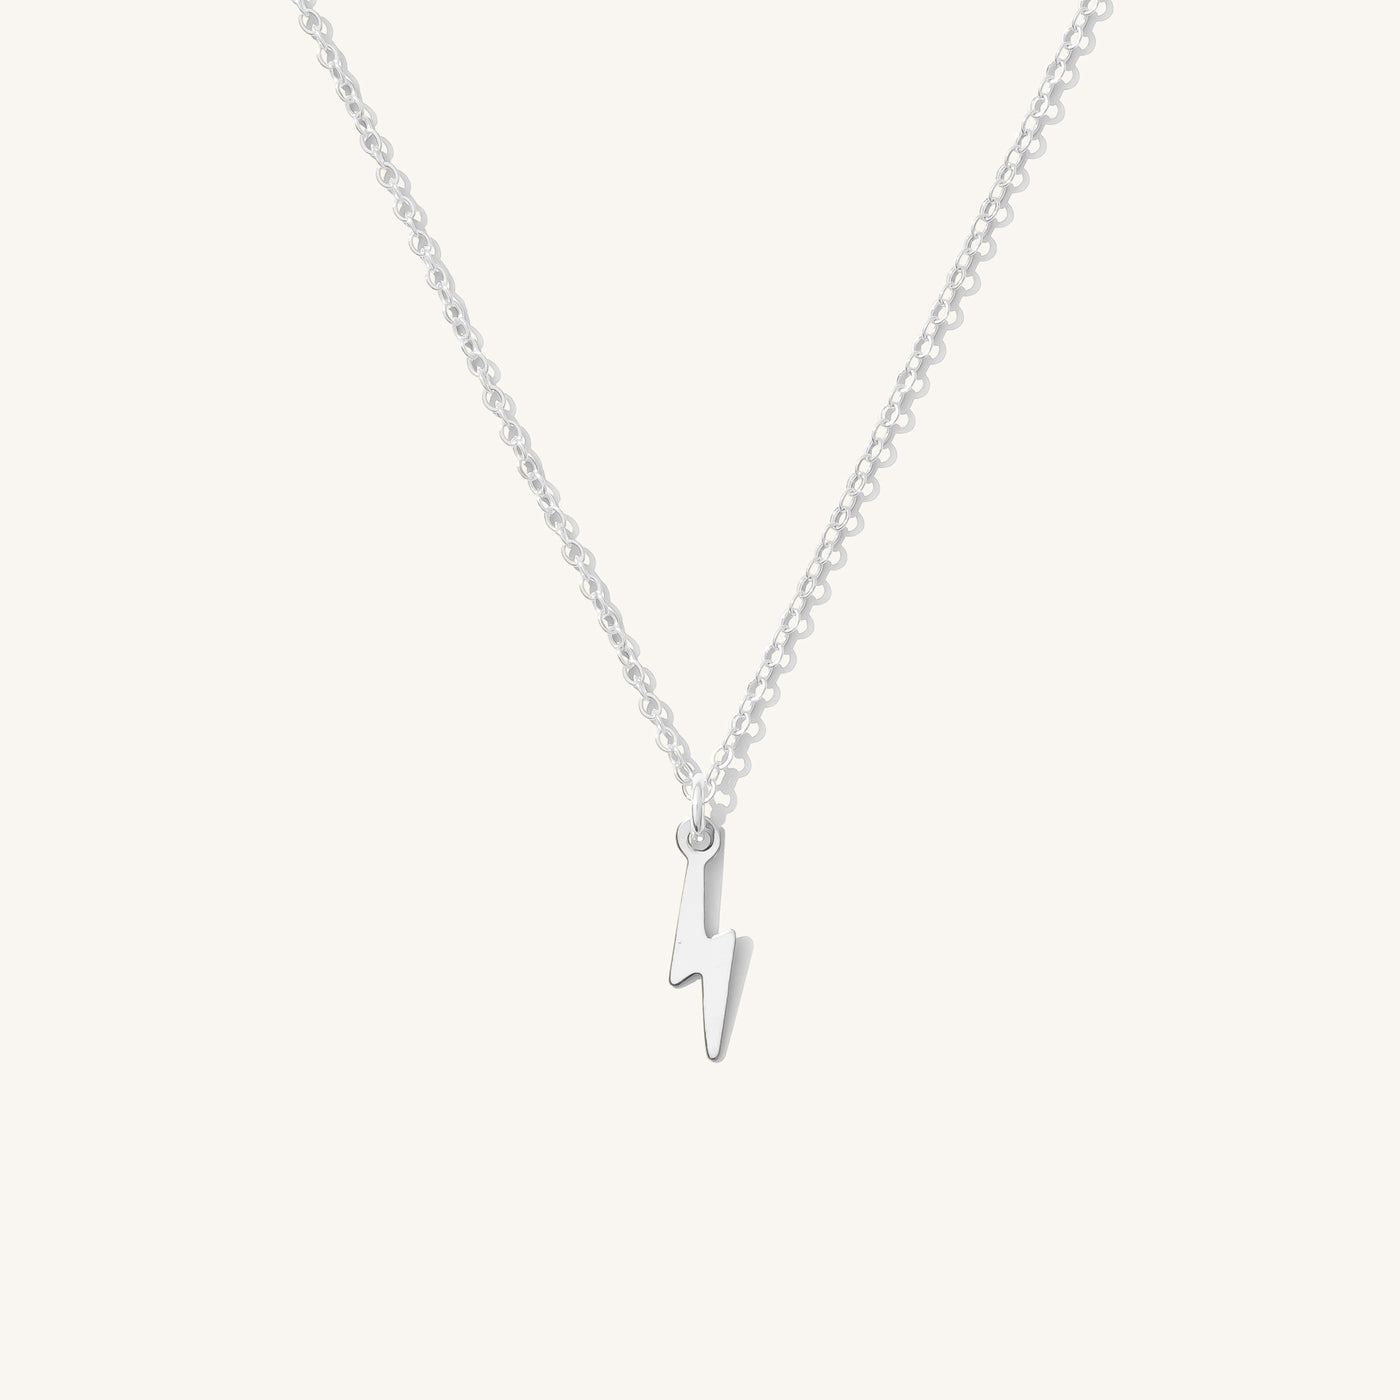 WFTW lightning bolt pendant necklace in silver | ASOS